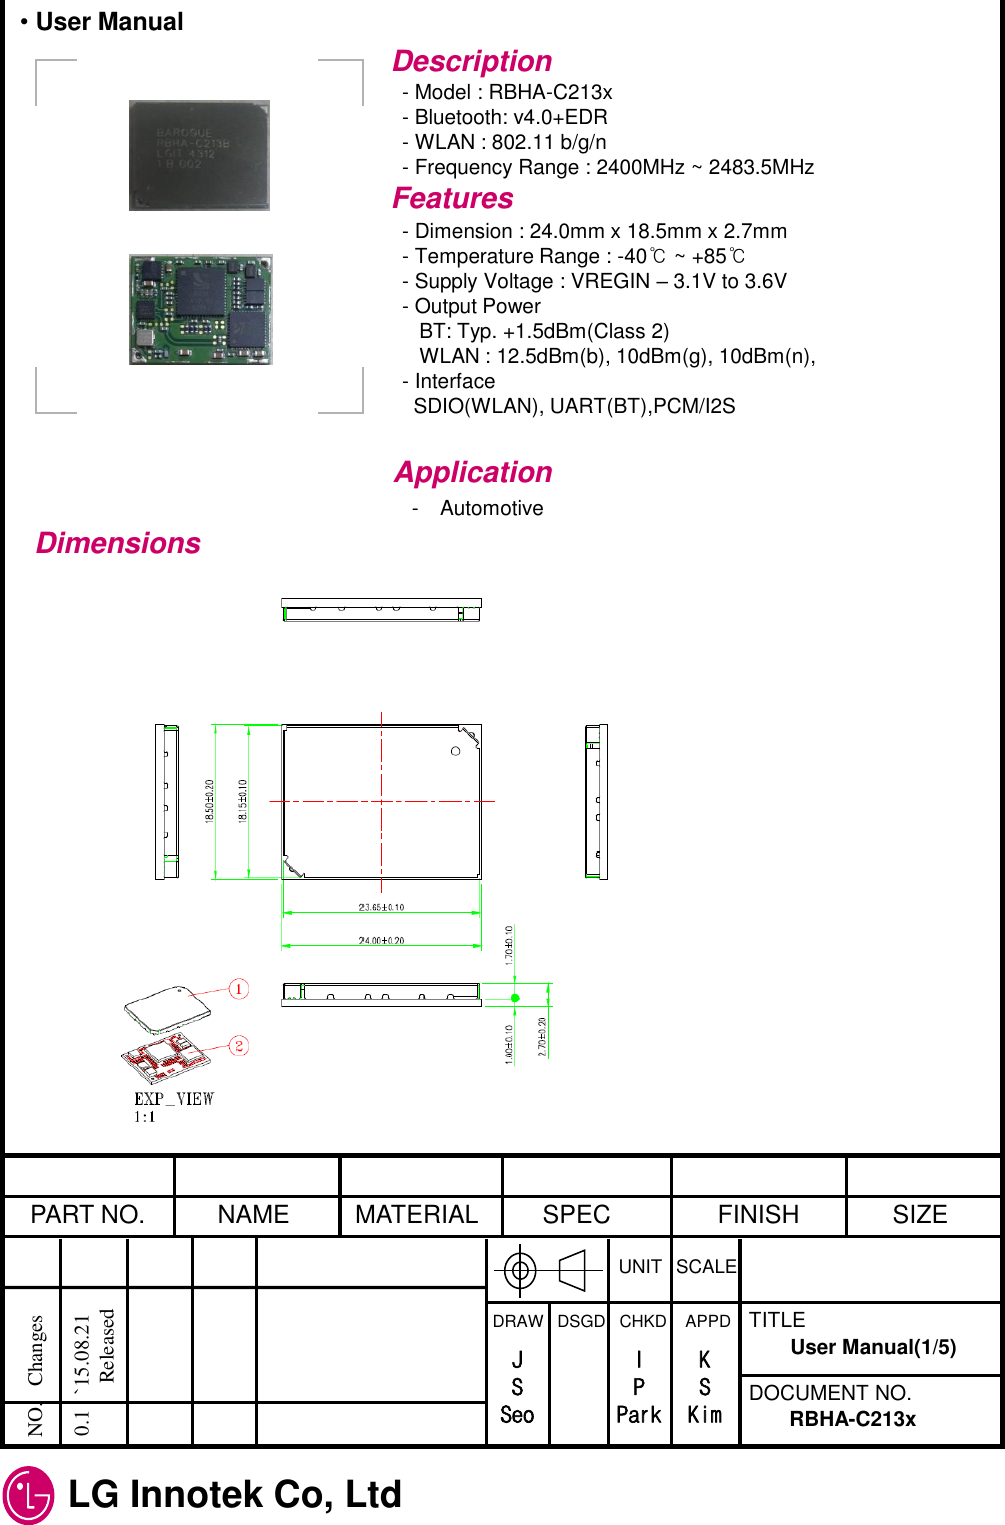  LG Innotek Co, Ltd   PART NO.  NAME  MATERIAL  SPEC  FINISH  SIZE UNIT  SCALE DRAW   DSGD   CHKD    APPD  TITLE DOCUMENT NO. NO.   Changes     0.1   `15.08.21               Released RBHA-C213x User Manual(1/5) J S Seo I P Park K S Kim Description - Model : RBHA-C213x - Bluetooth: v4.0+EDR - WLAN : 802.11 b/g/n - Frequency Range : 2400MHz ~ 2483.5MHz Features - Dimension : 24.0mm x 18.5mm x 2.7mm - Temperature Range : -40℃ ~ +85℃ - Supply Voltage : VREGIN – 3.1V to 3.6V - Output Power    BT: Typ. +1.5dBm(Class 2)    WLAN : 12.5dBm(b), 10dBm(g), 10dBm(n),  - Interface   SDIO(WLAN), UART(BT),PCM/I2S Application - Automotive Dimensions • User Manual 